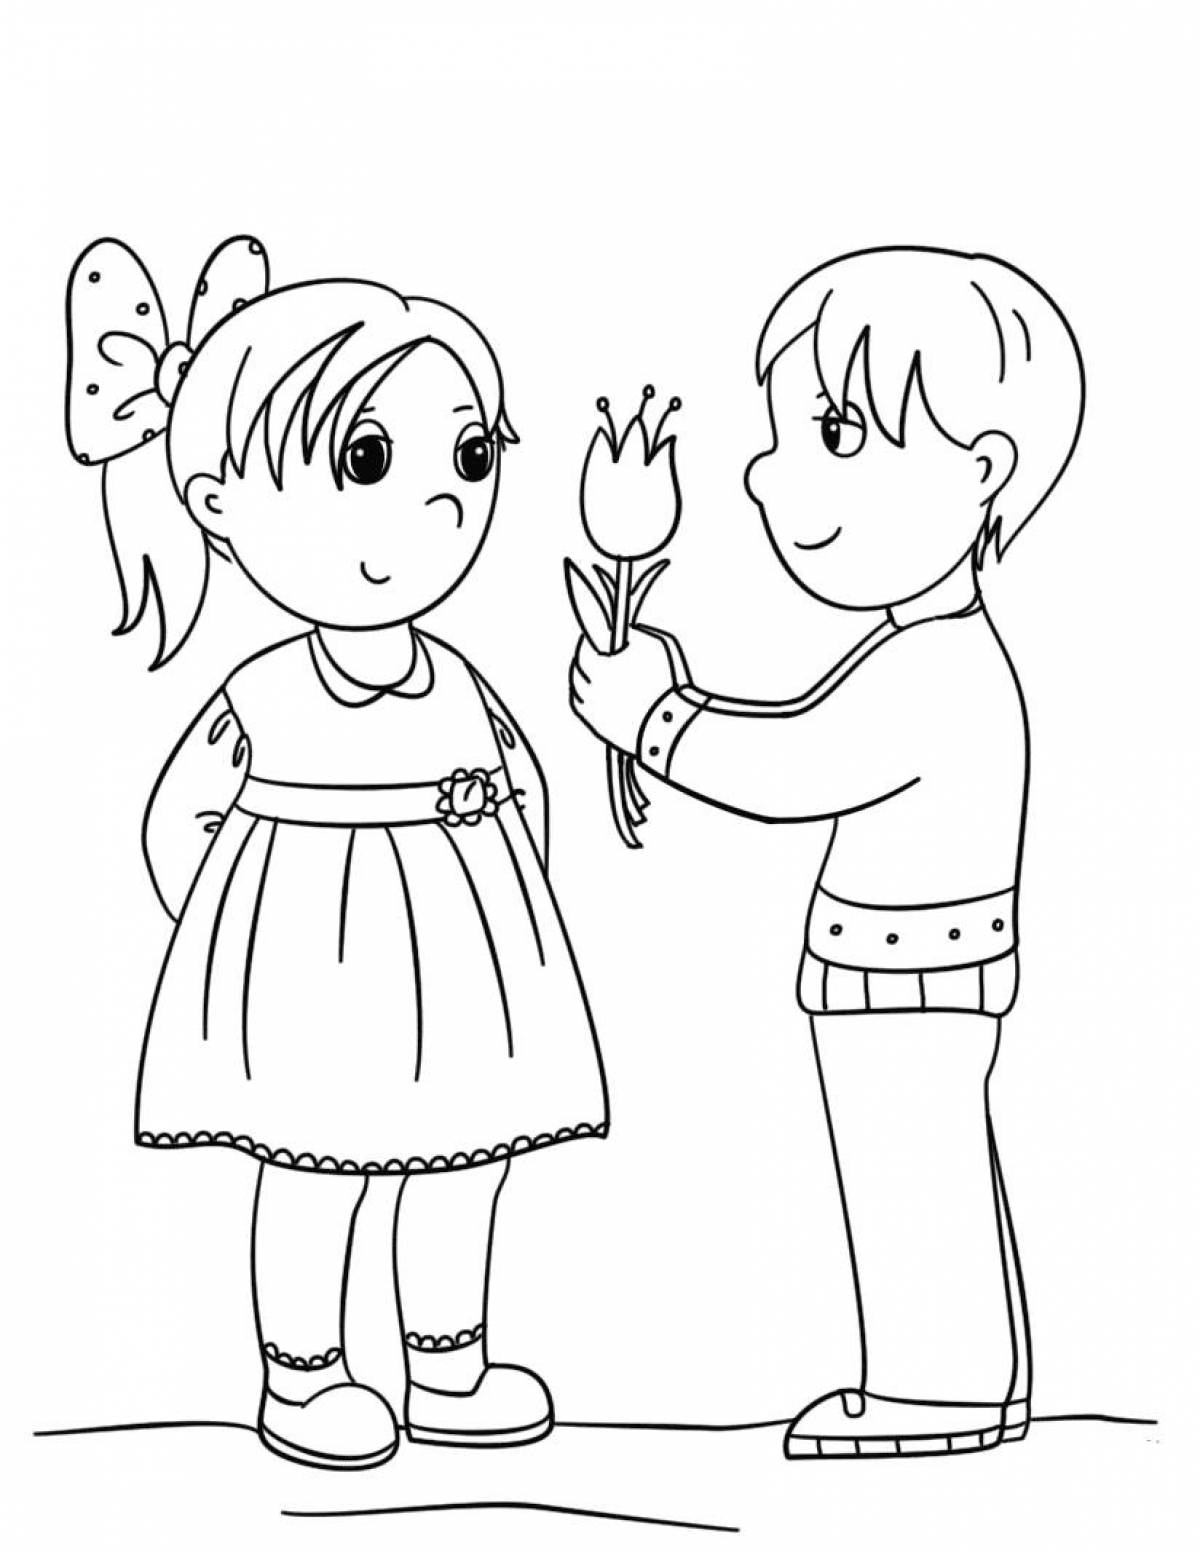 Boy gives a flower